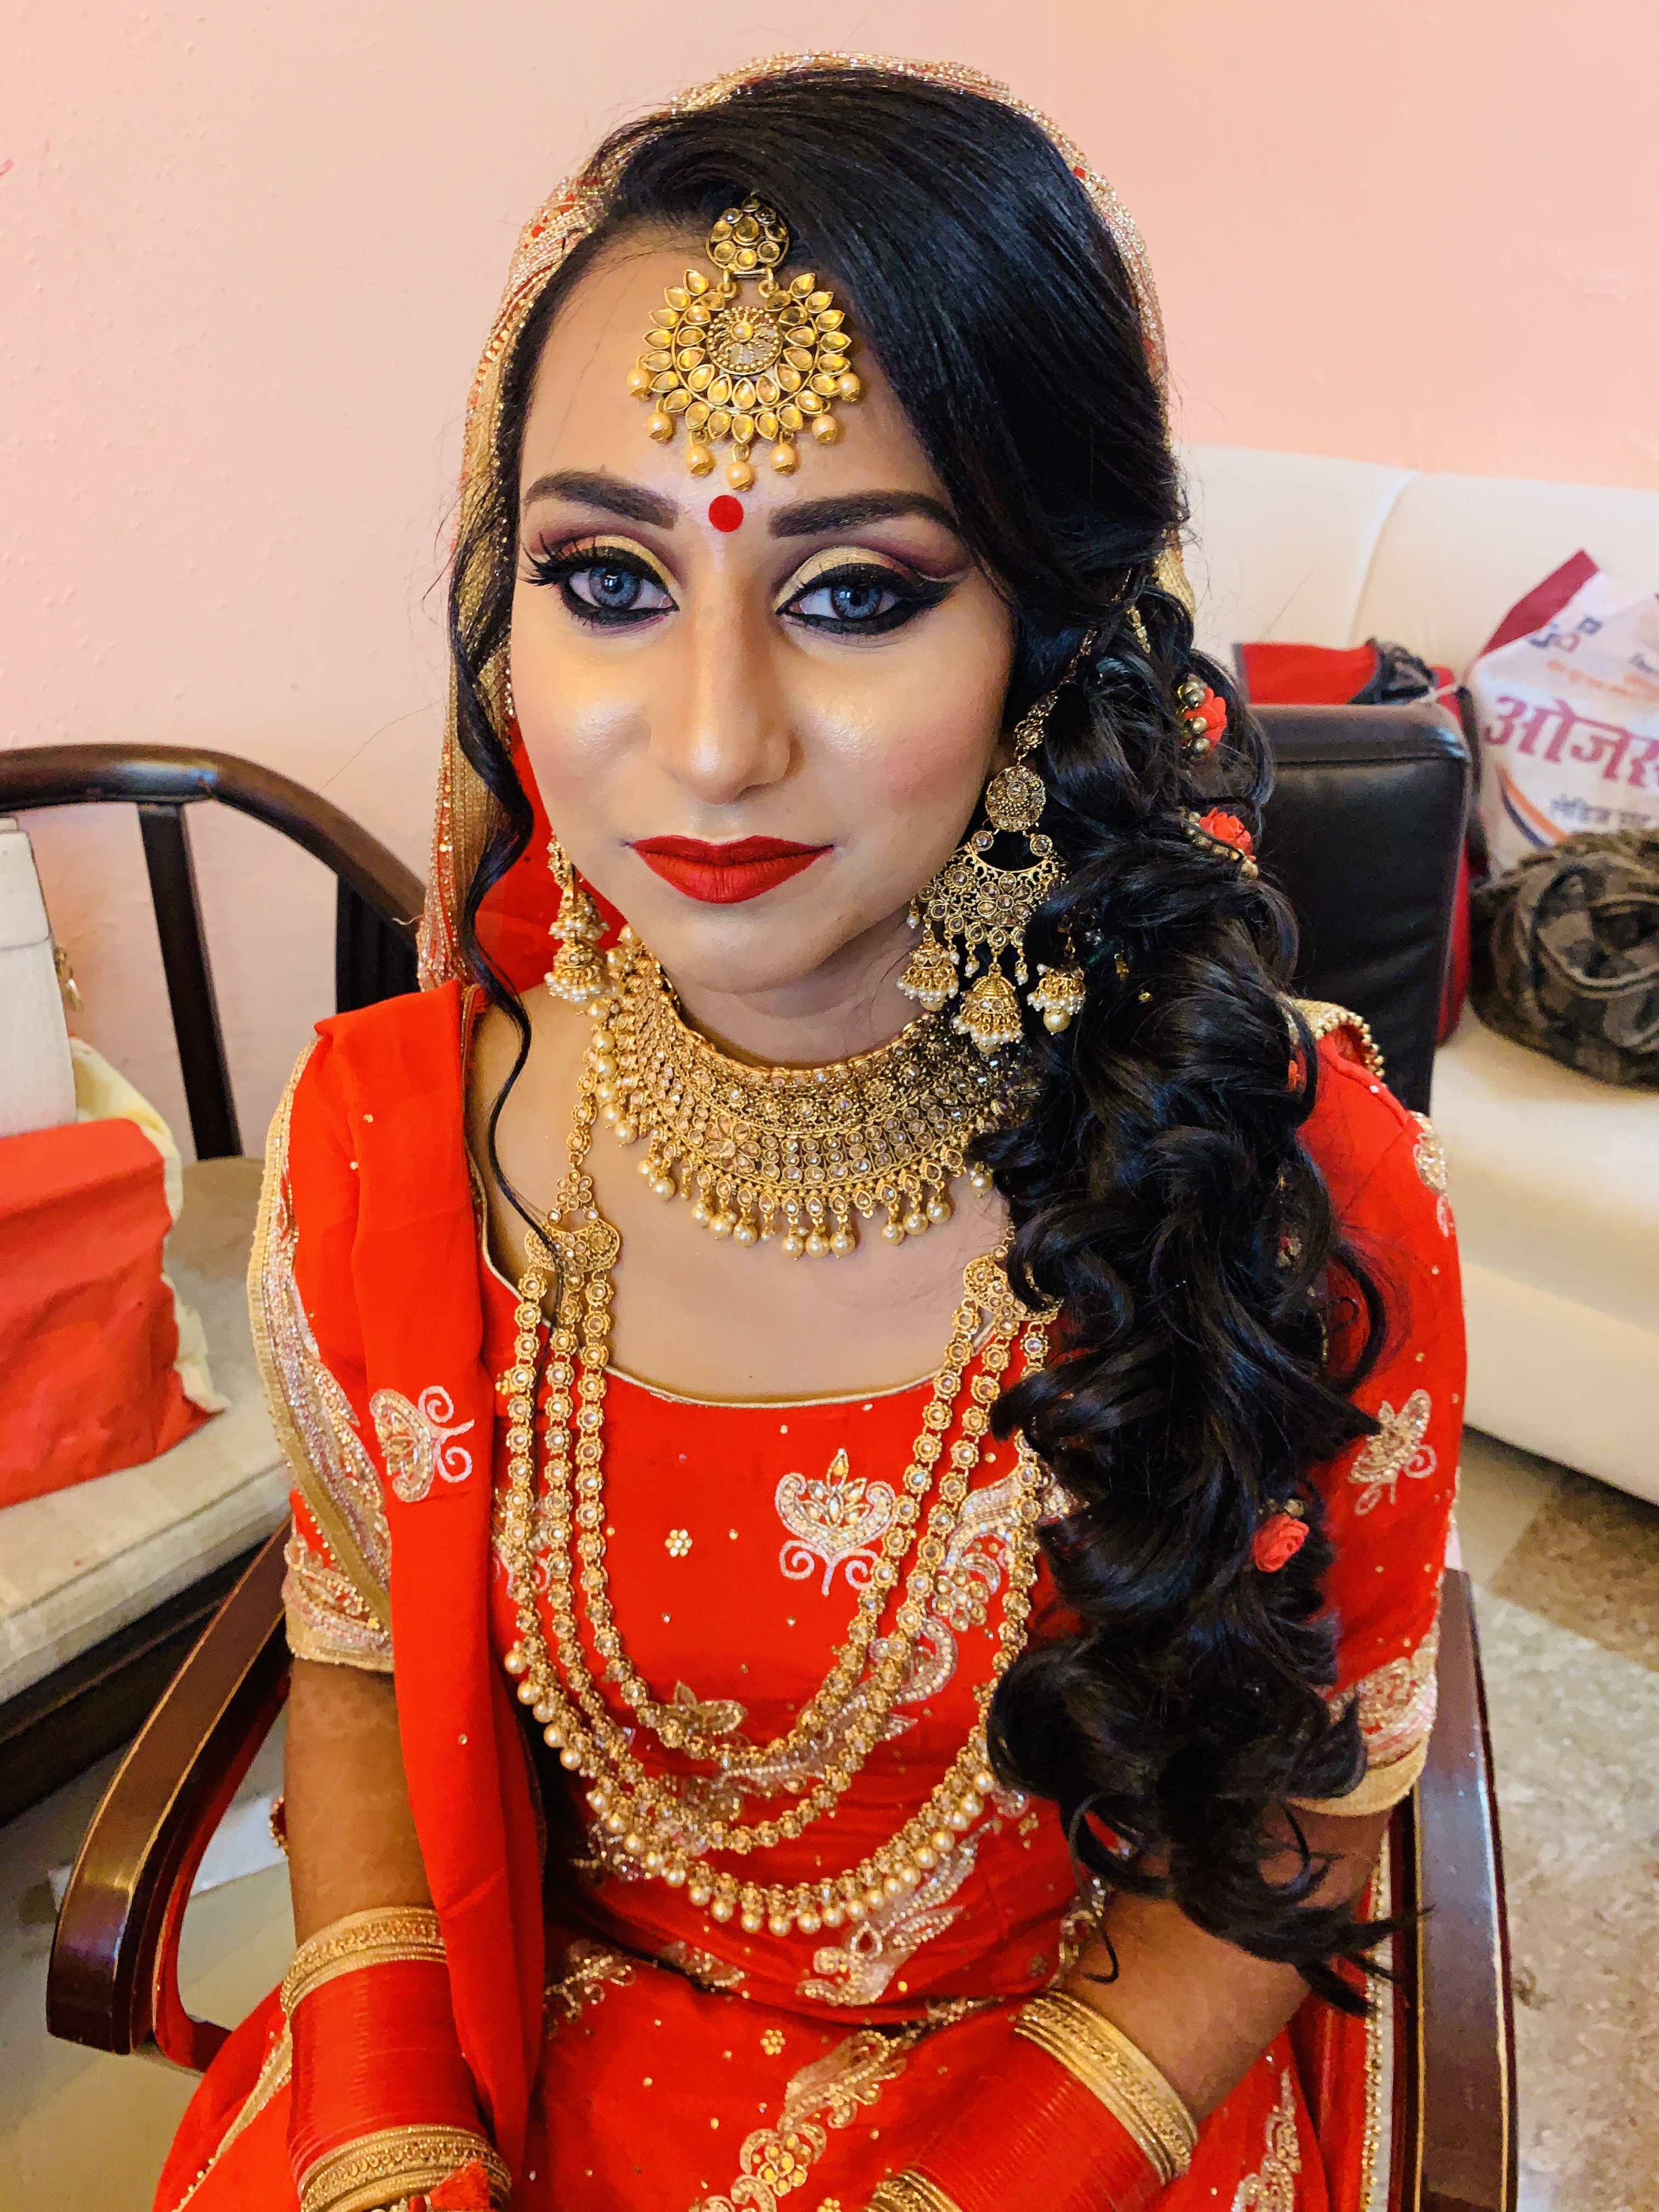 manpreet-kaur-makeup-artist-jalandhar